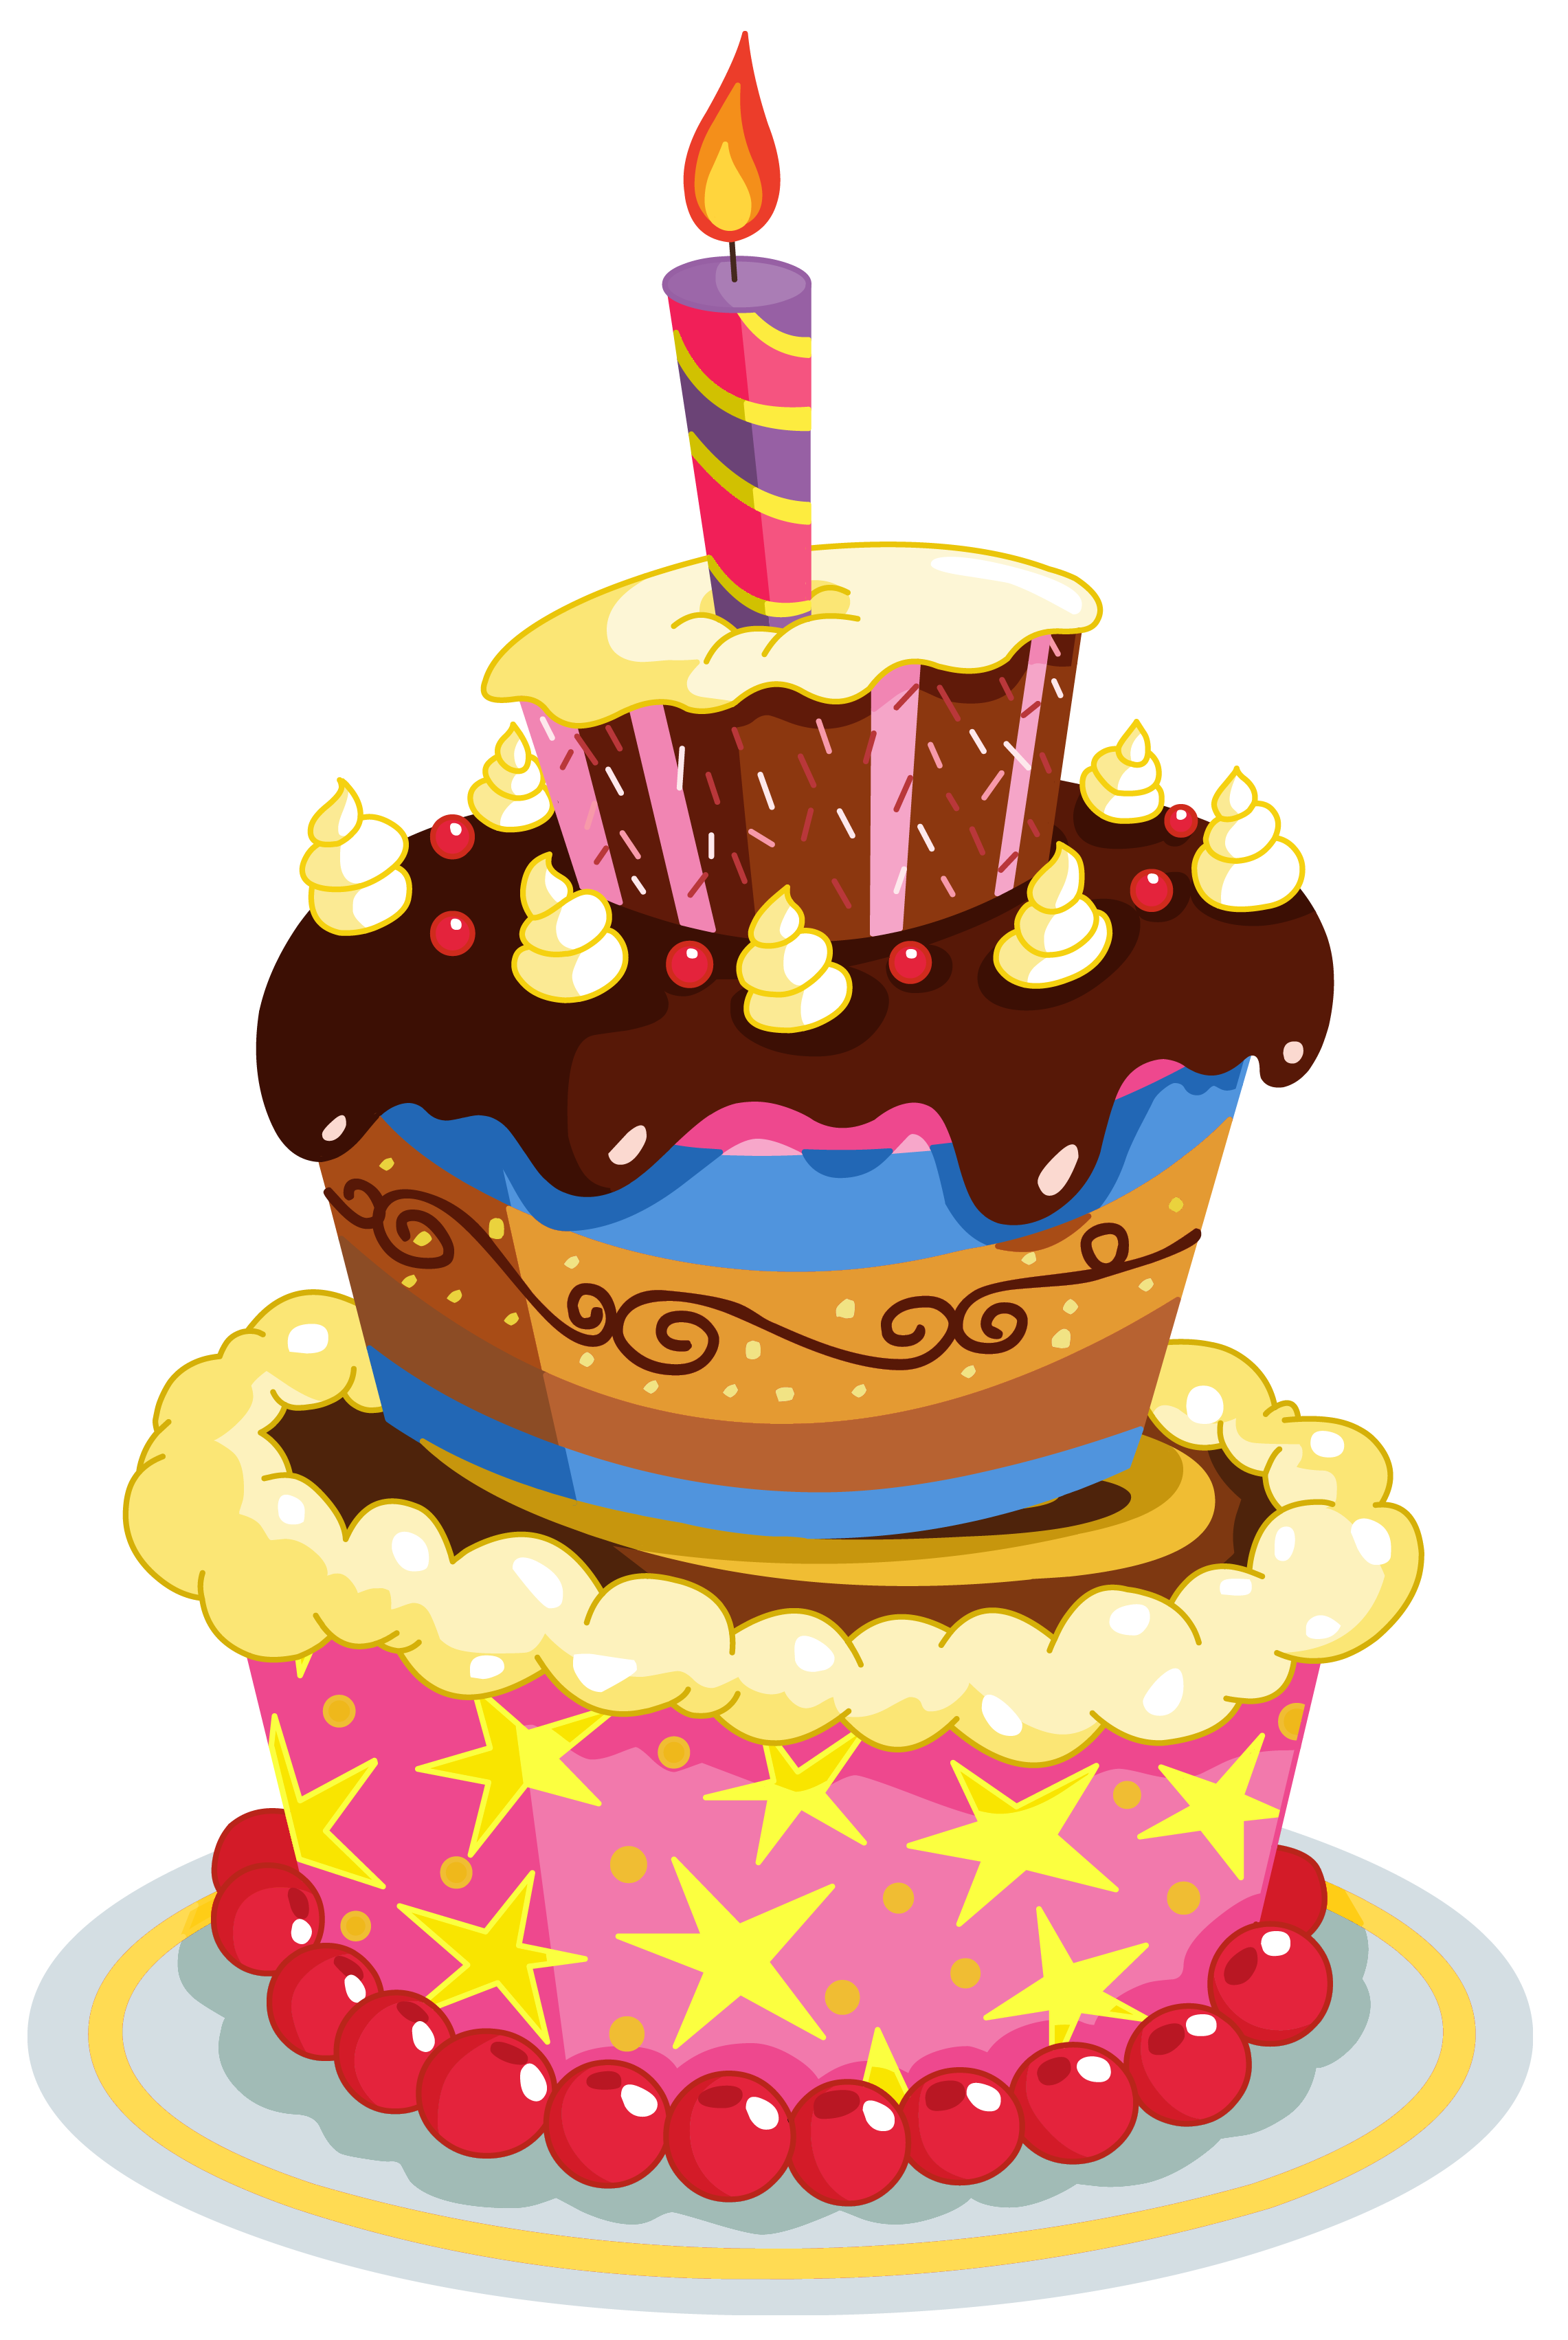 File:Birthday Cake22.png - Wikipedia